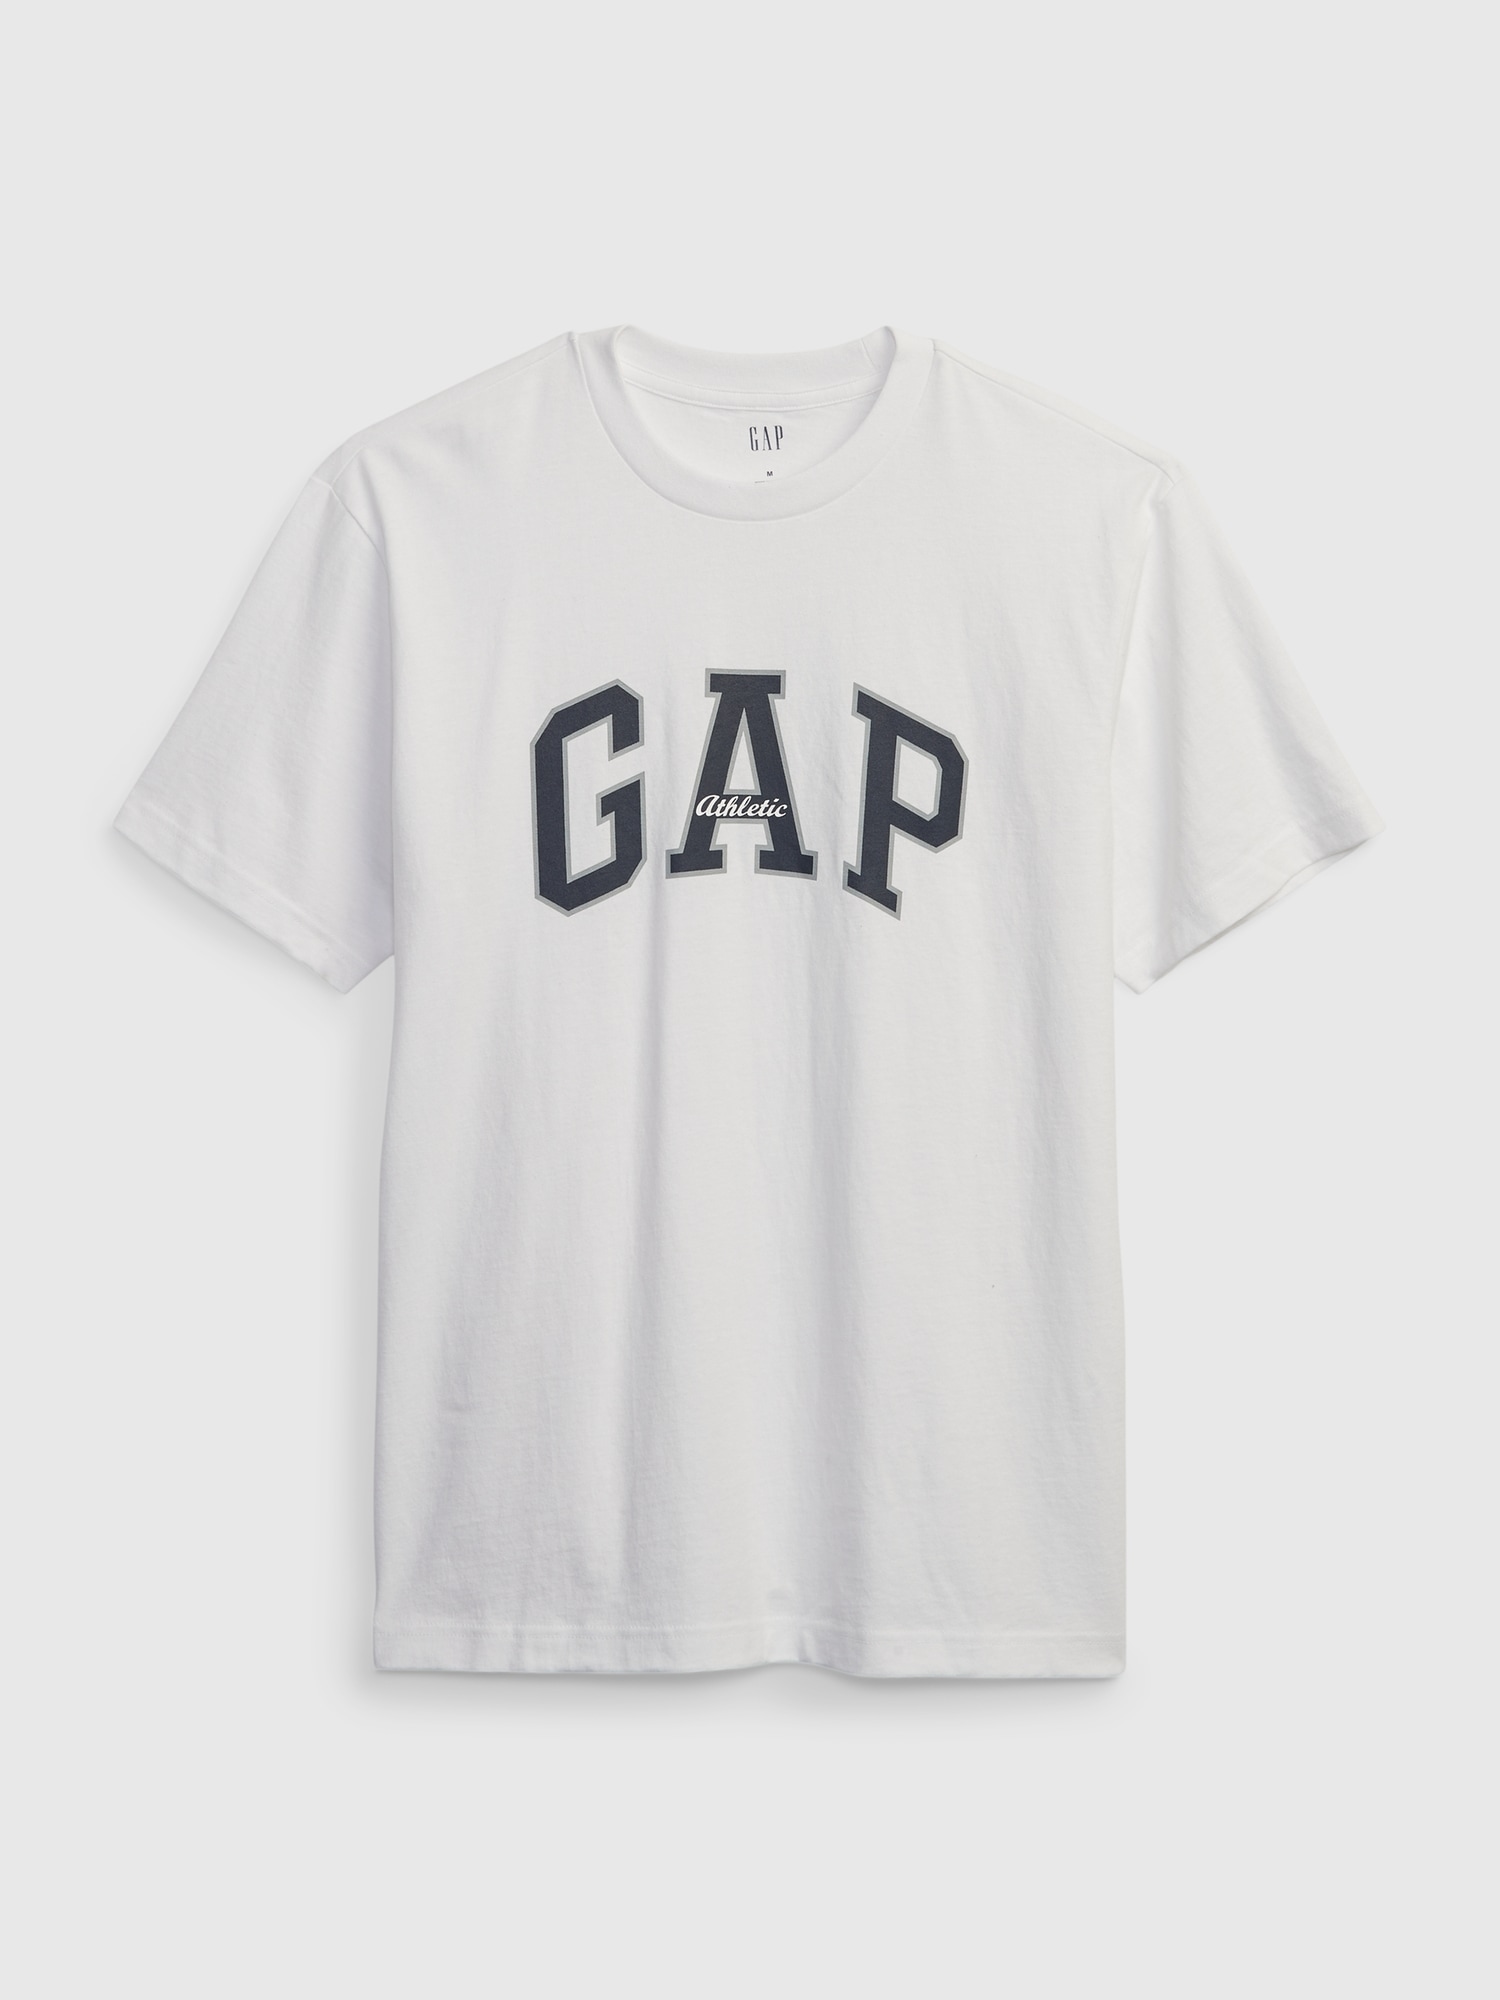 Paternal Jane Austen message Archive Gap Arch Logo T-Shirt | Gap